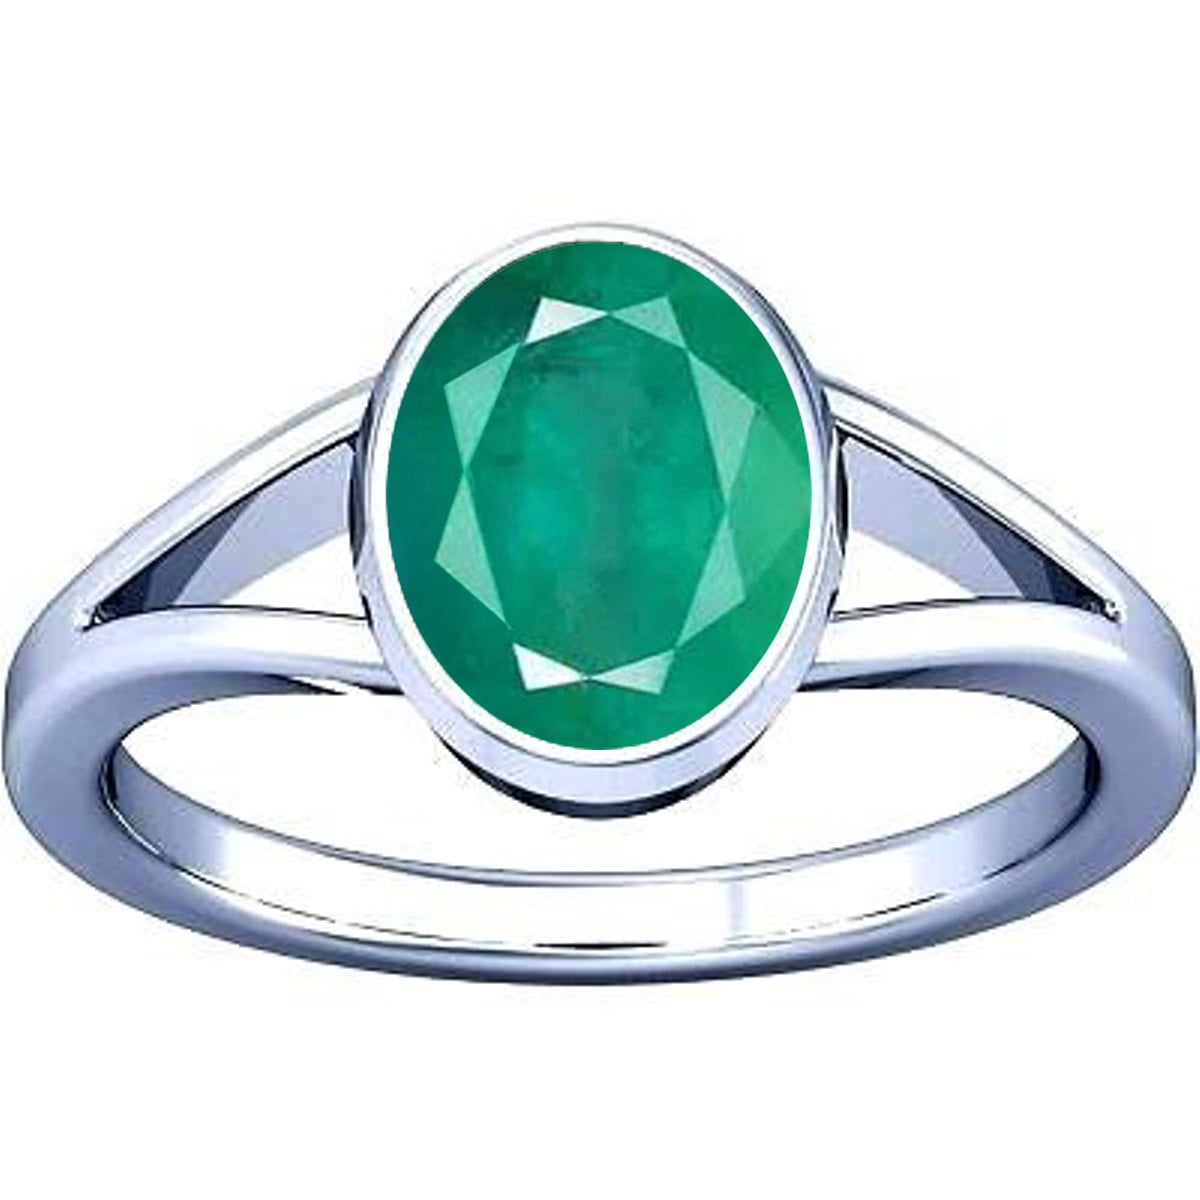 emerald certified, emerald, panna, markat, panna stone, emerald stone,  panchdhatu ring, panna stone benefits, emerald eternity ring – CLARA